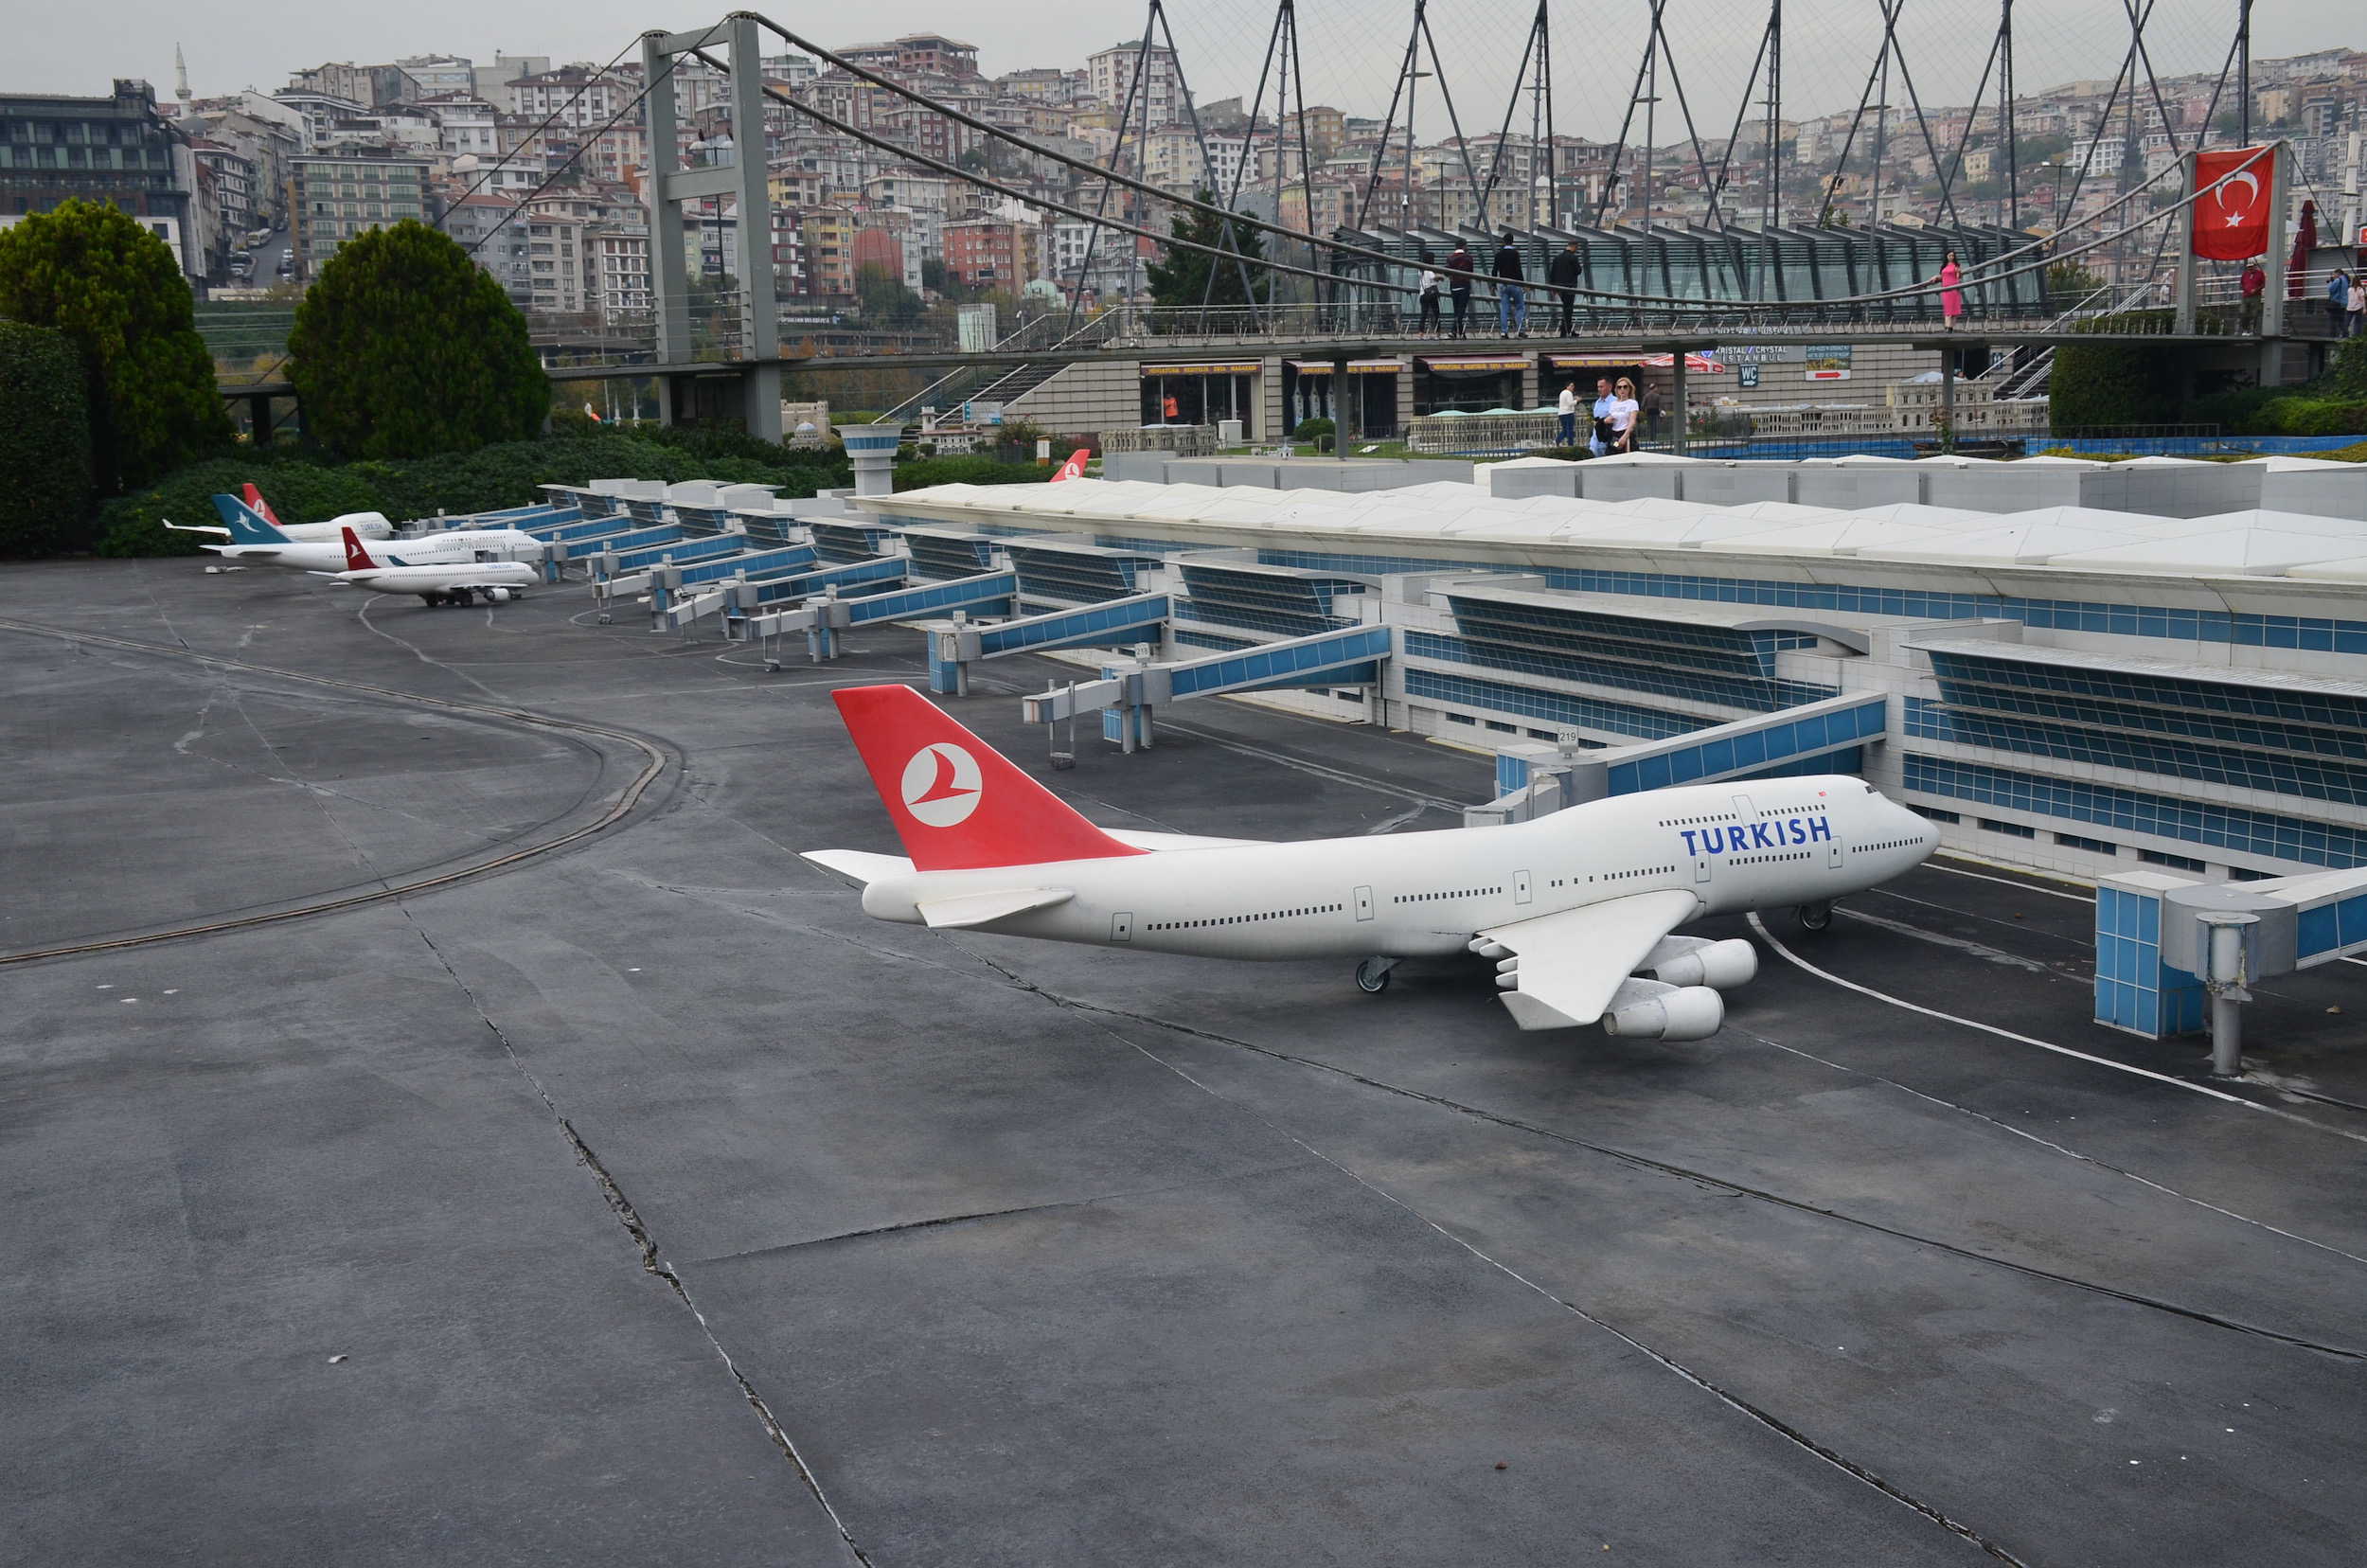 Model of Atatürk Airport, Yeşilköy, 20th century at Miniatürk in Istanbul, Turkey